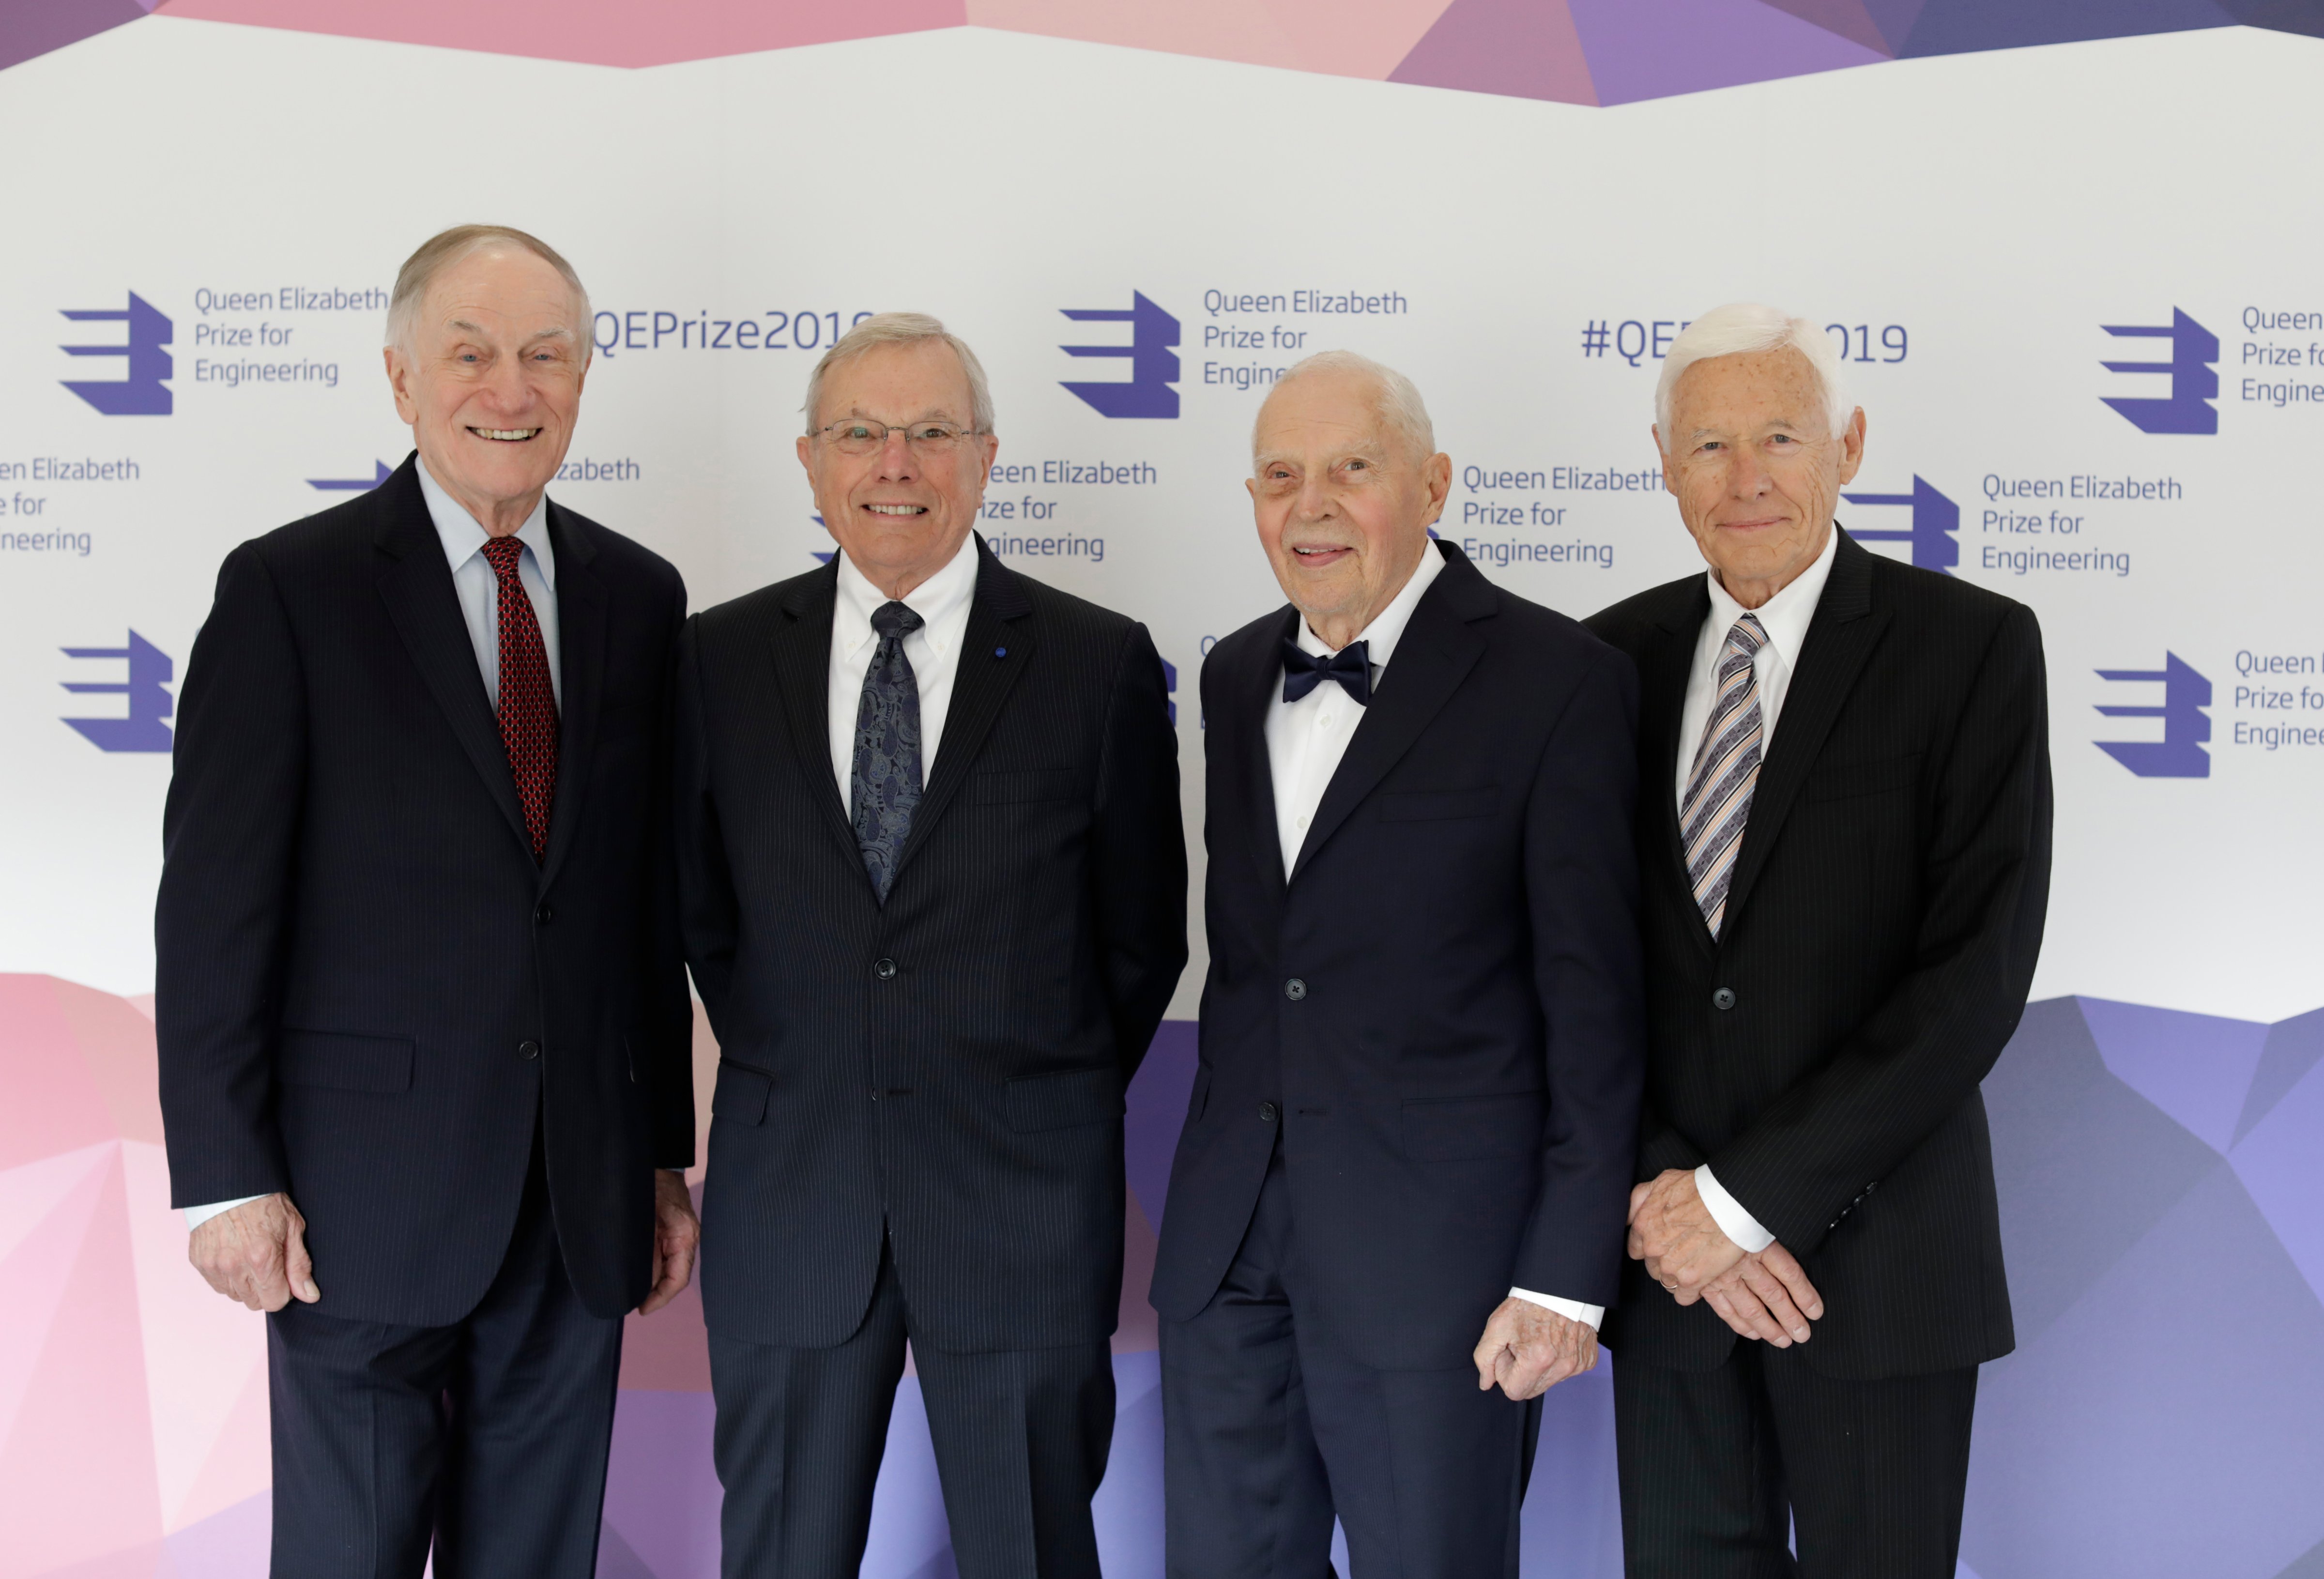 Winners of the 2019 Queen Elizabeth Prize for Engineering, L-R Richard Schwartz, Dr. Bradford Parkinson, Professor James Spilker, Jr, Hugo Fruehauf